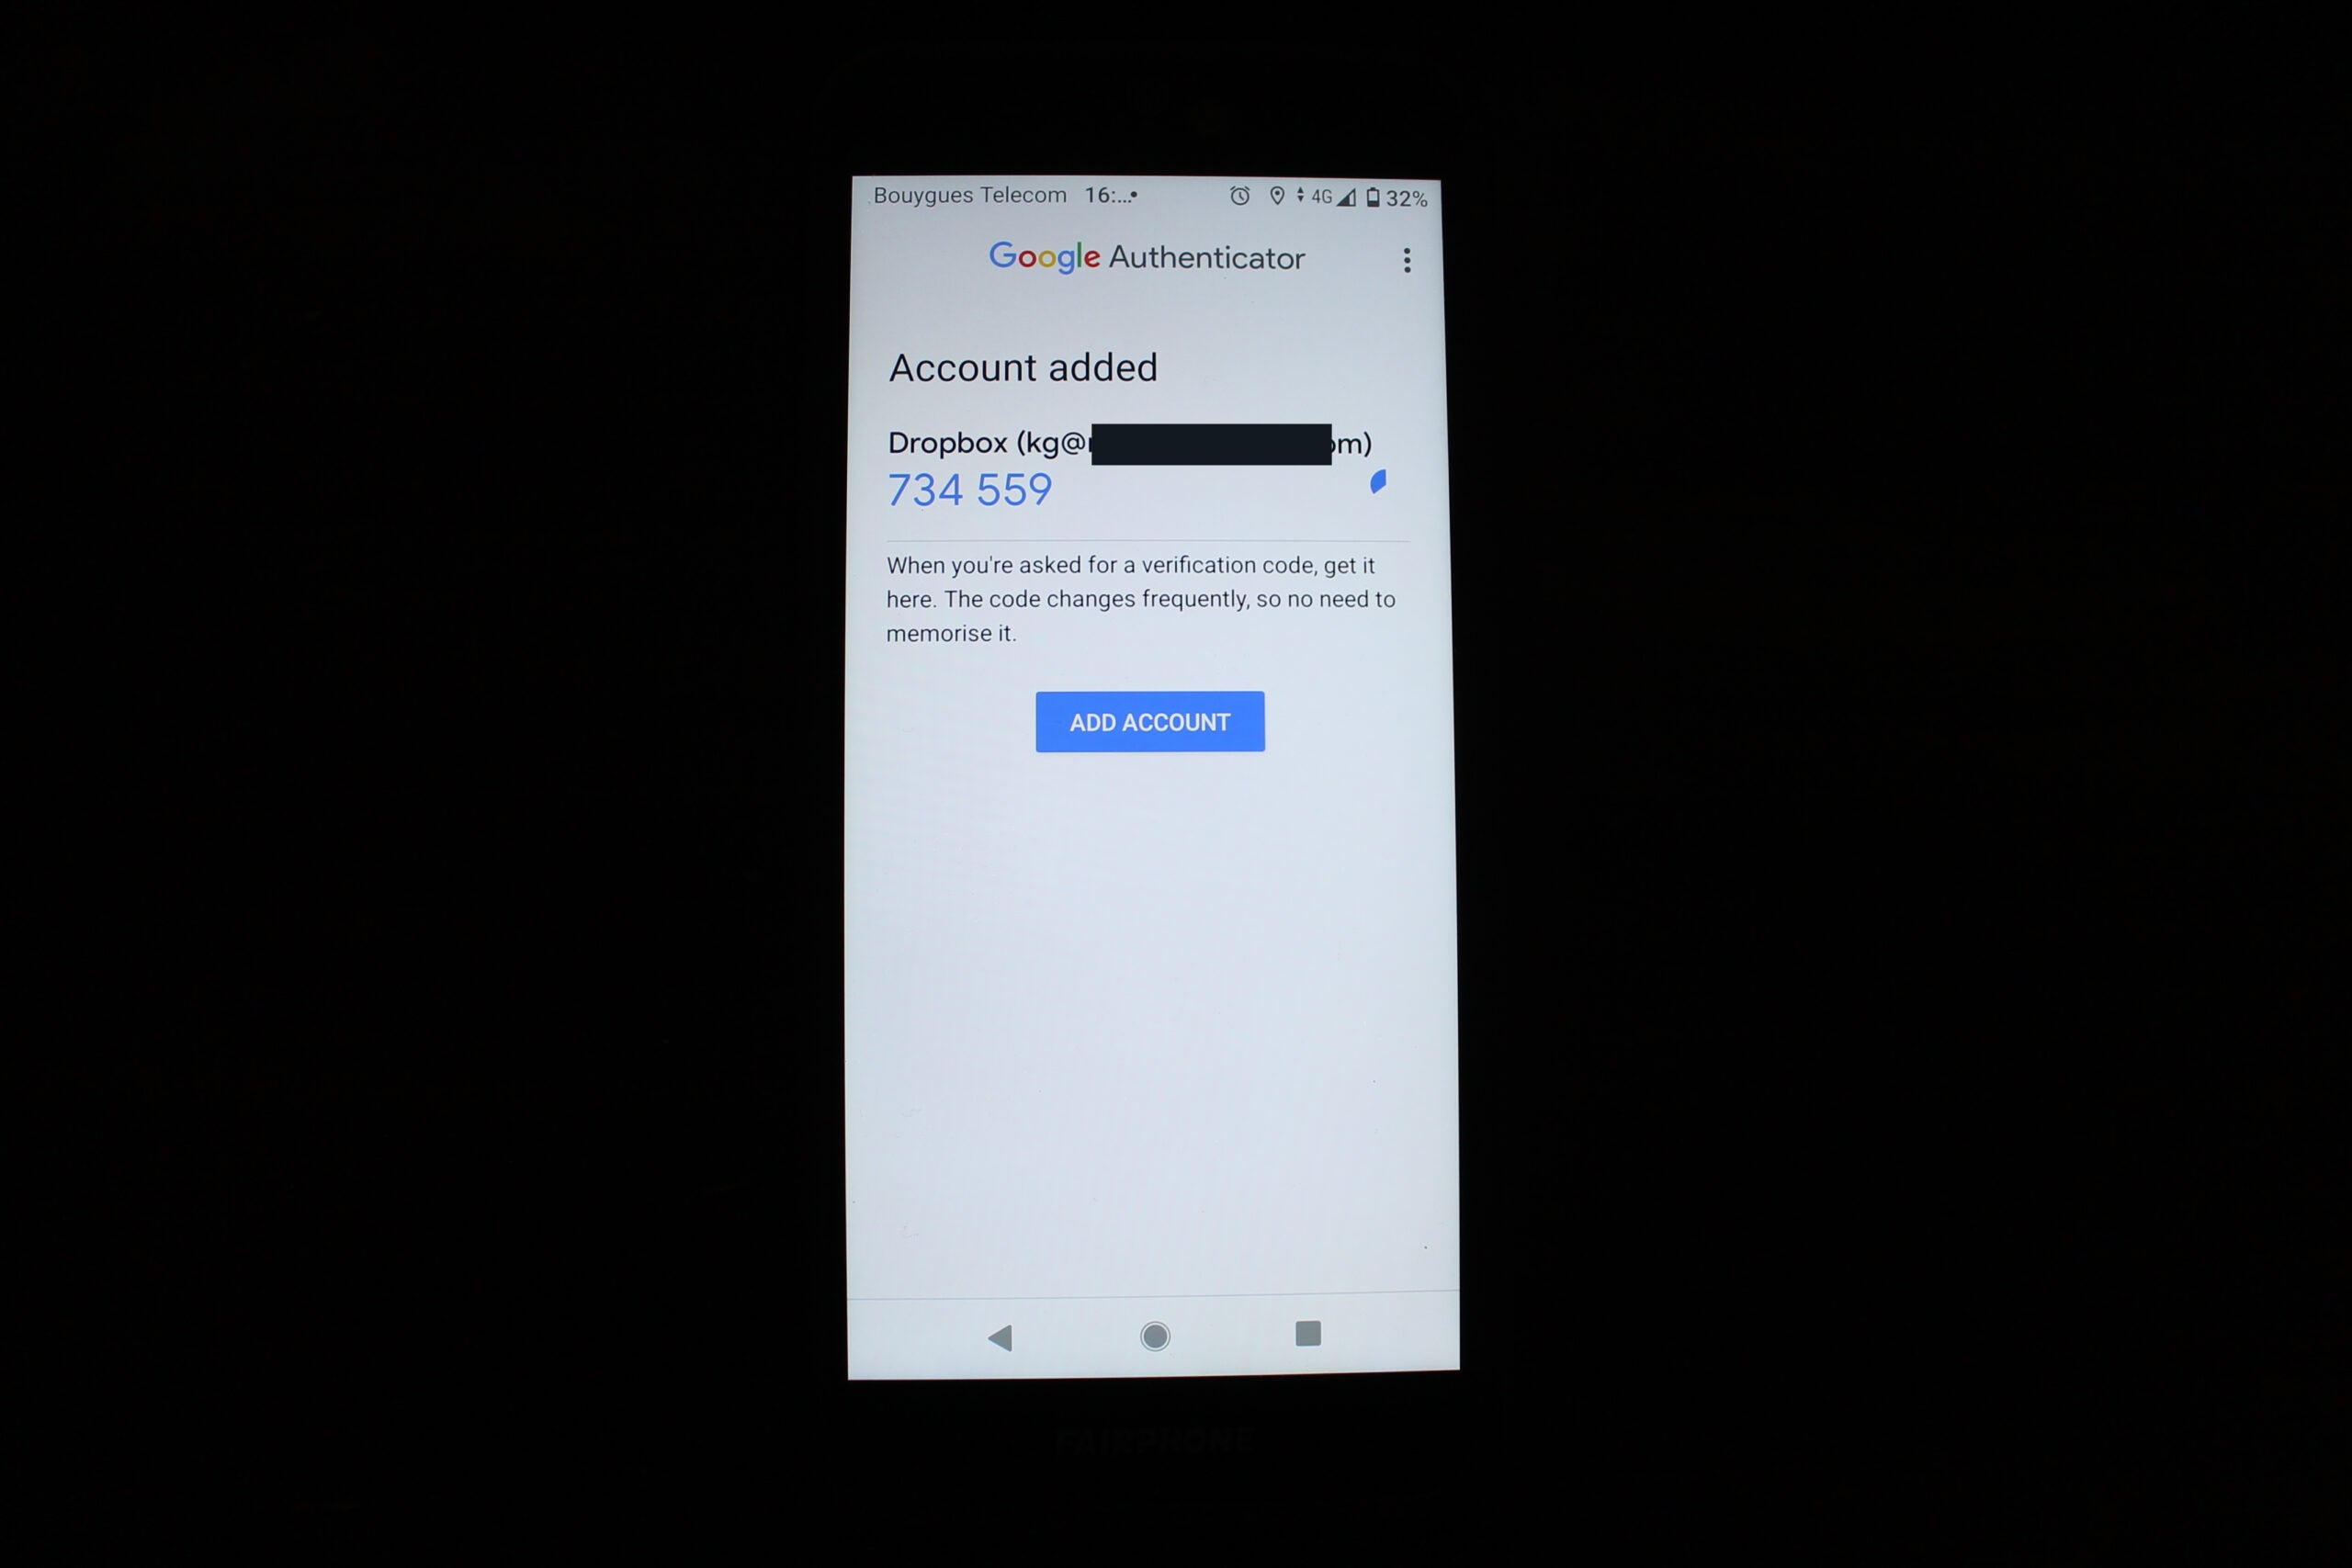 Google Authenticator displays a 2FA code for Dropbox